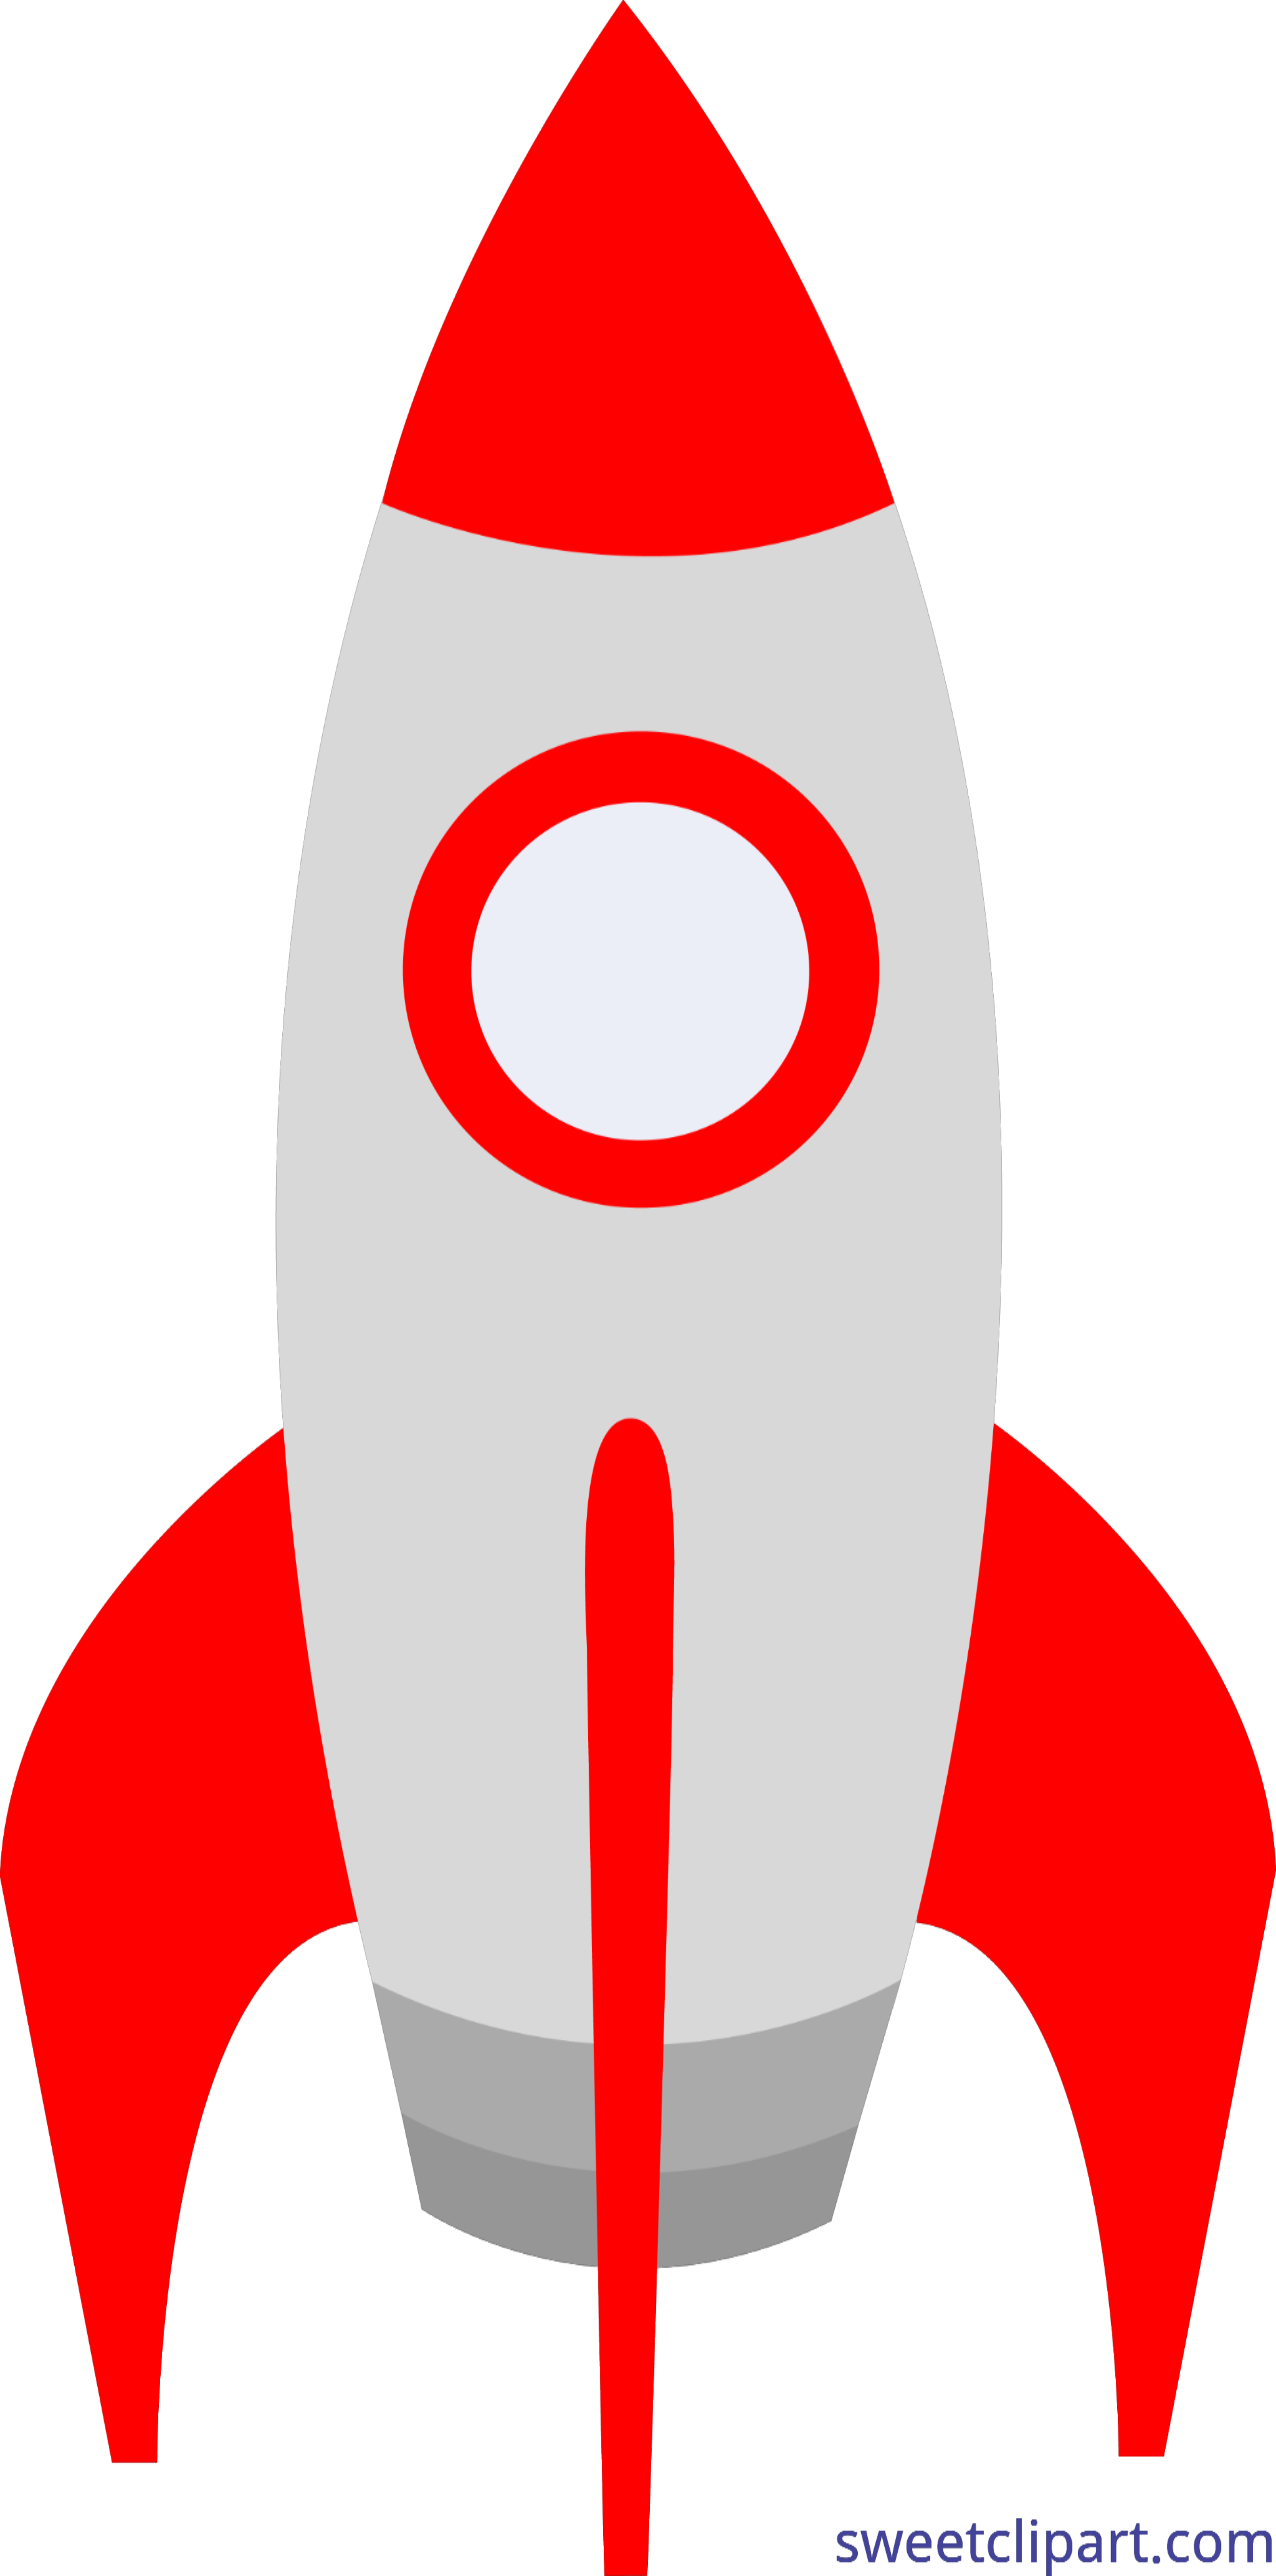 Cute red rocket.